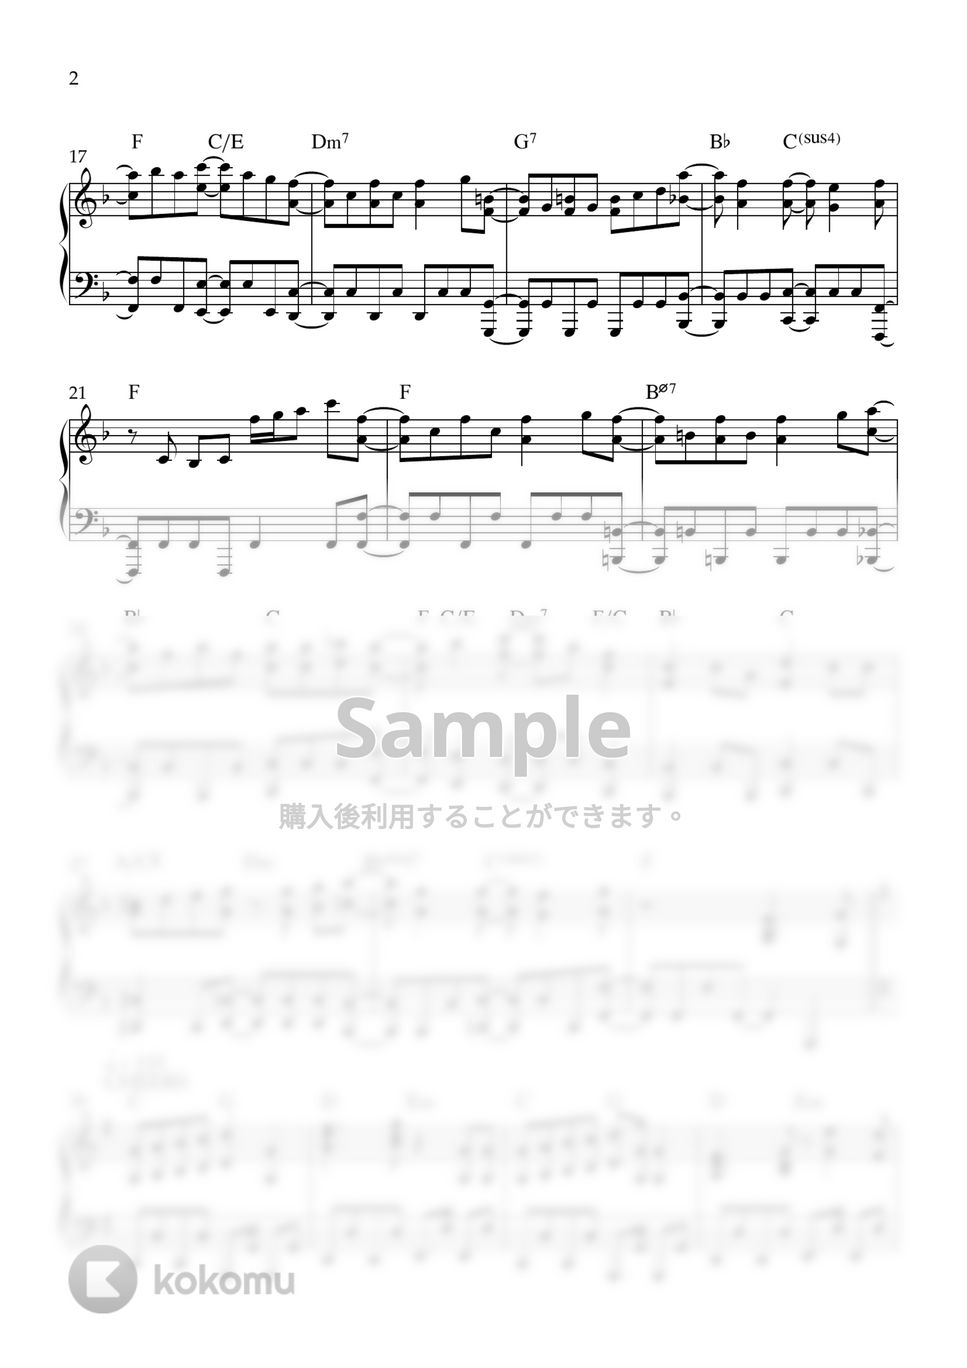 Mrs. GREEN APPLE - Mrs. GREEN APPLE ピアノメドレー (ピアノソロ) by kanapiano